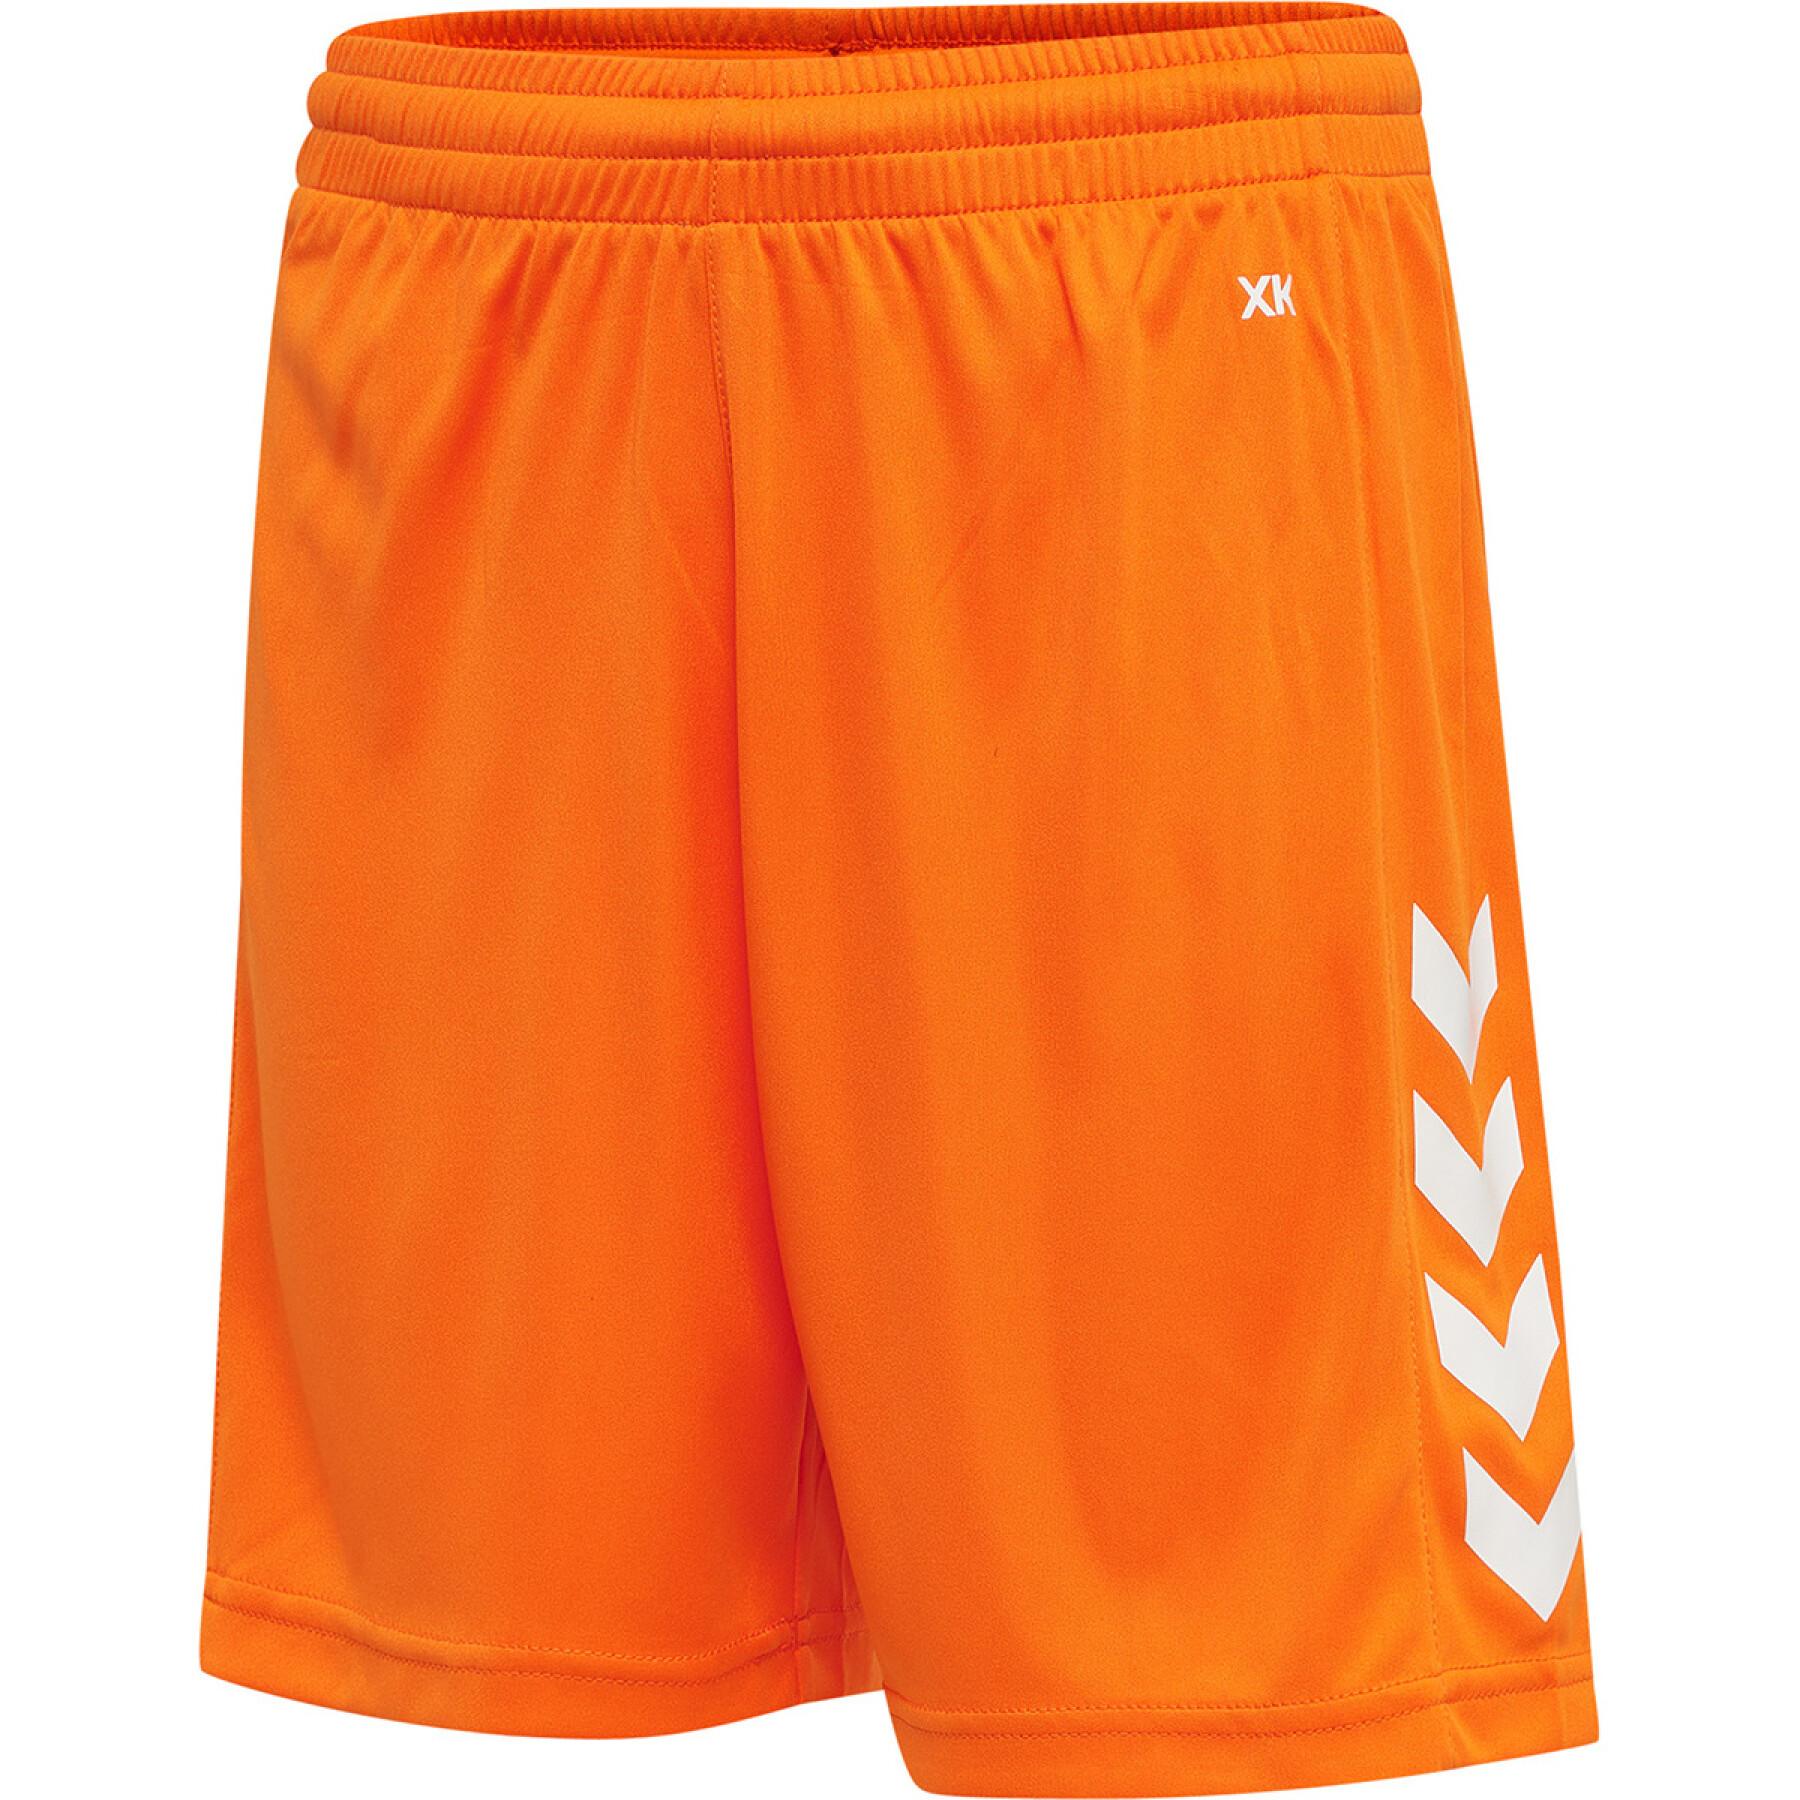 Children's shorts hmlCORE XK - Shorts - Junior's wear - Handball wear